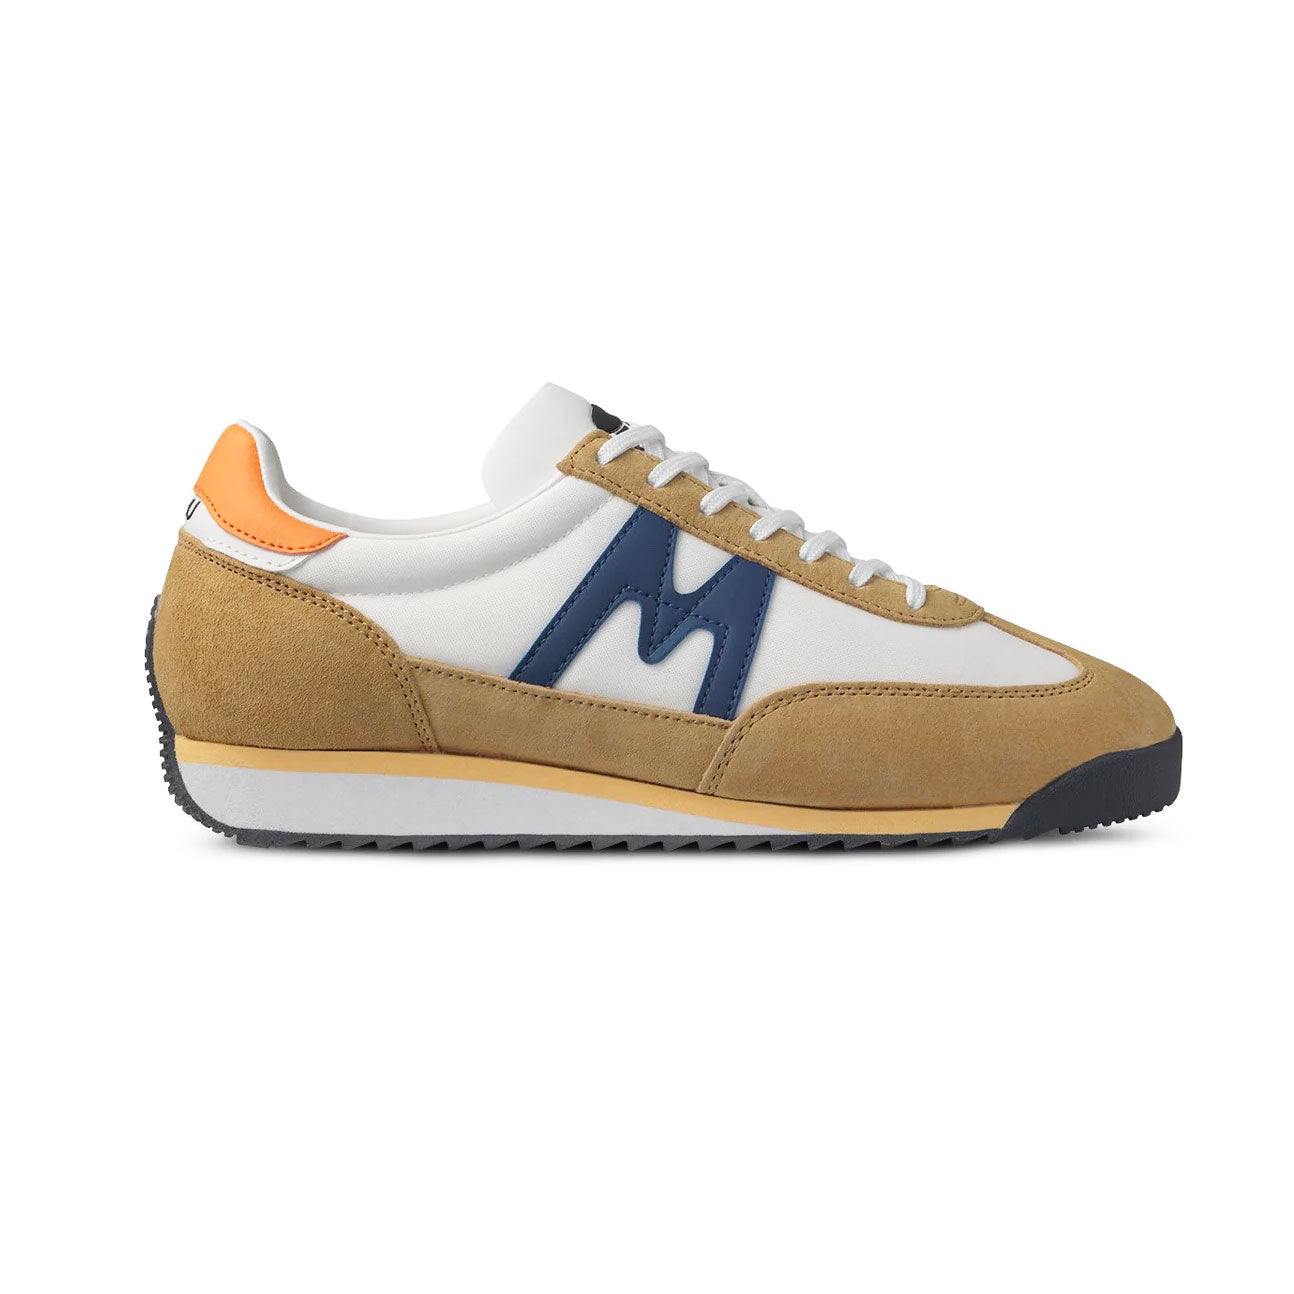 Karhu Mestari Curry True Navy New Men's 70s 80s Retro Style Sneakers Running Shoes Size 11 F805056